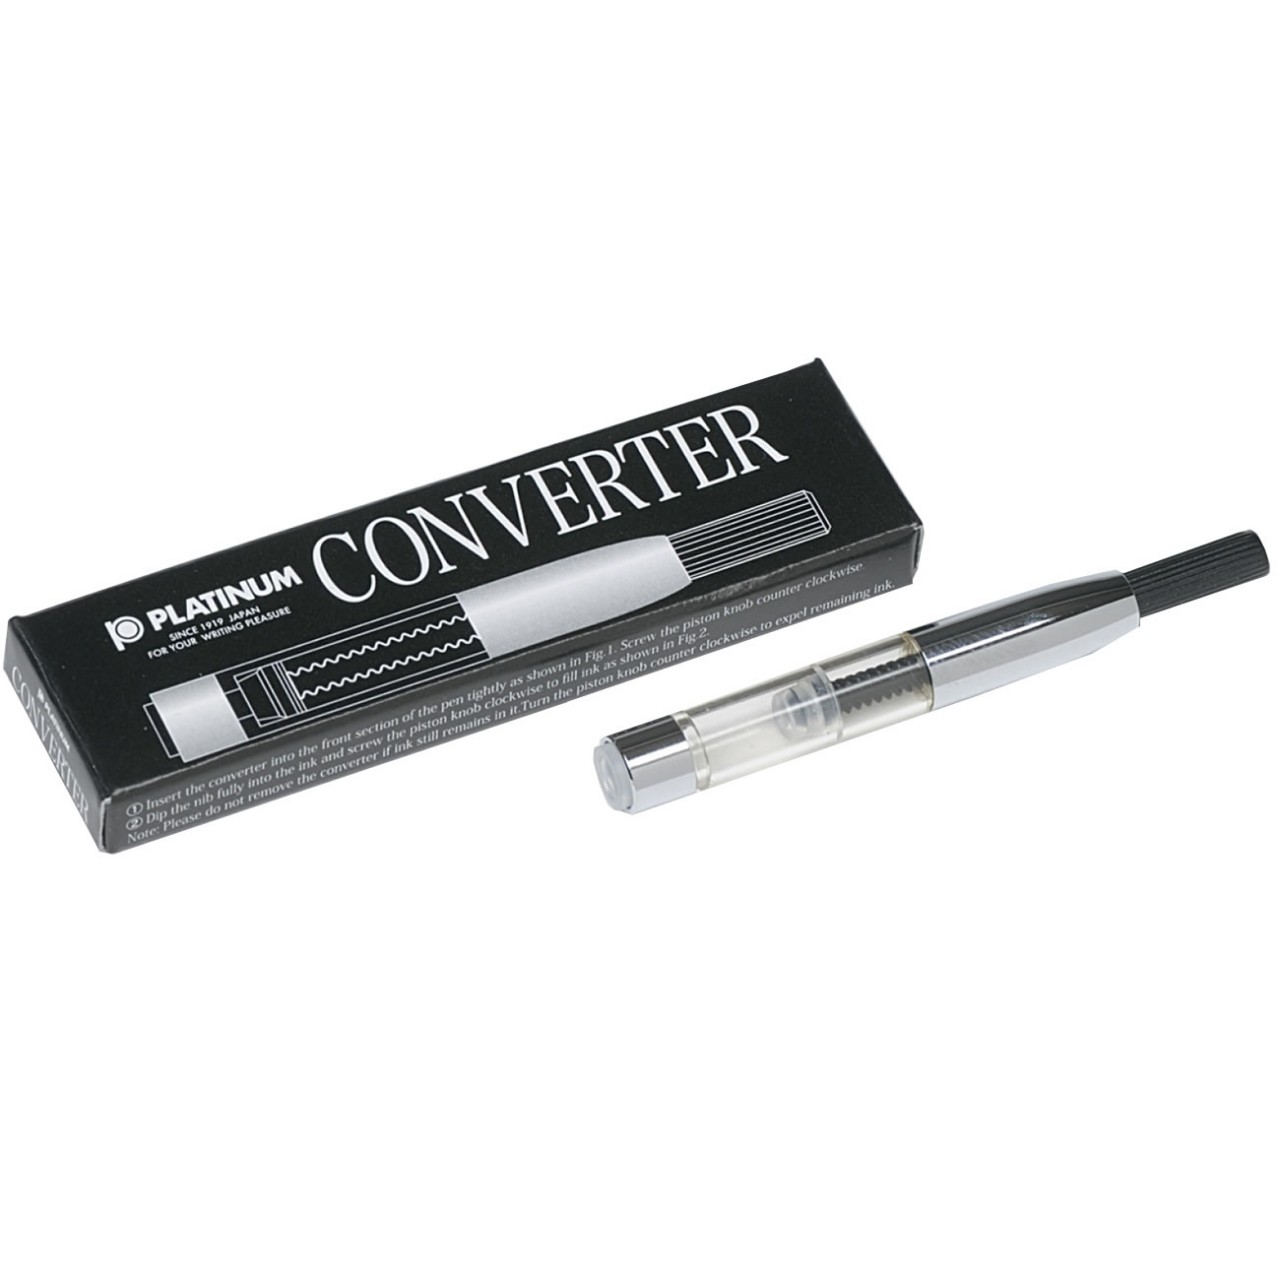 Platinum Silver converter for all Platinum FP